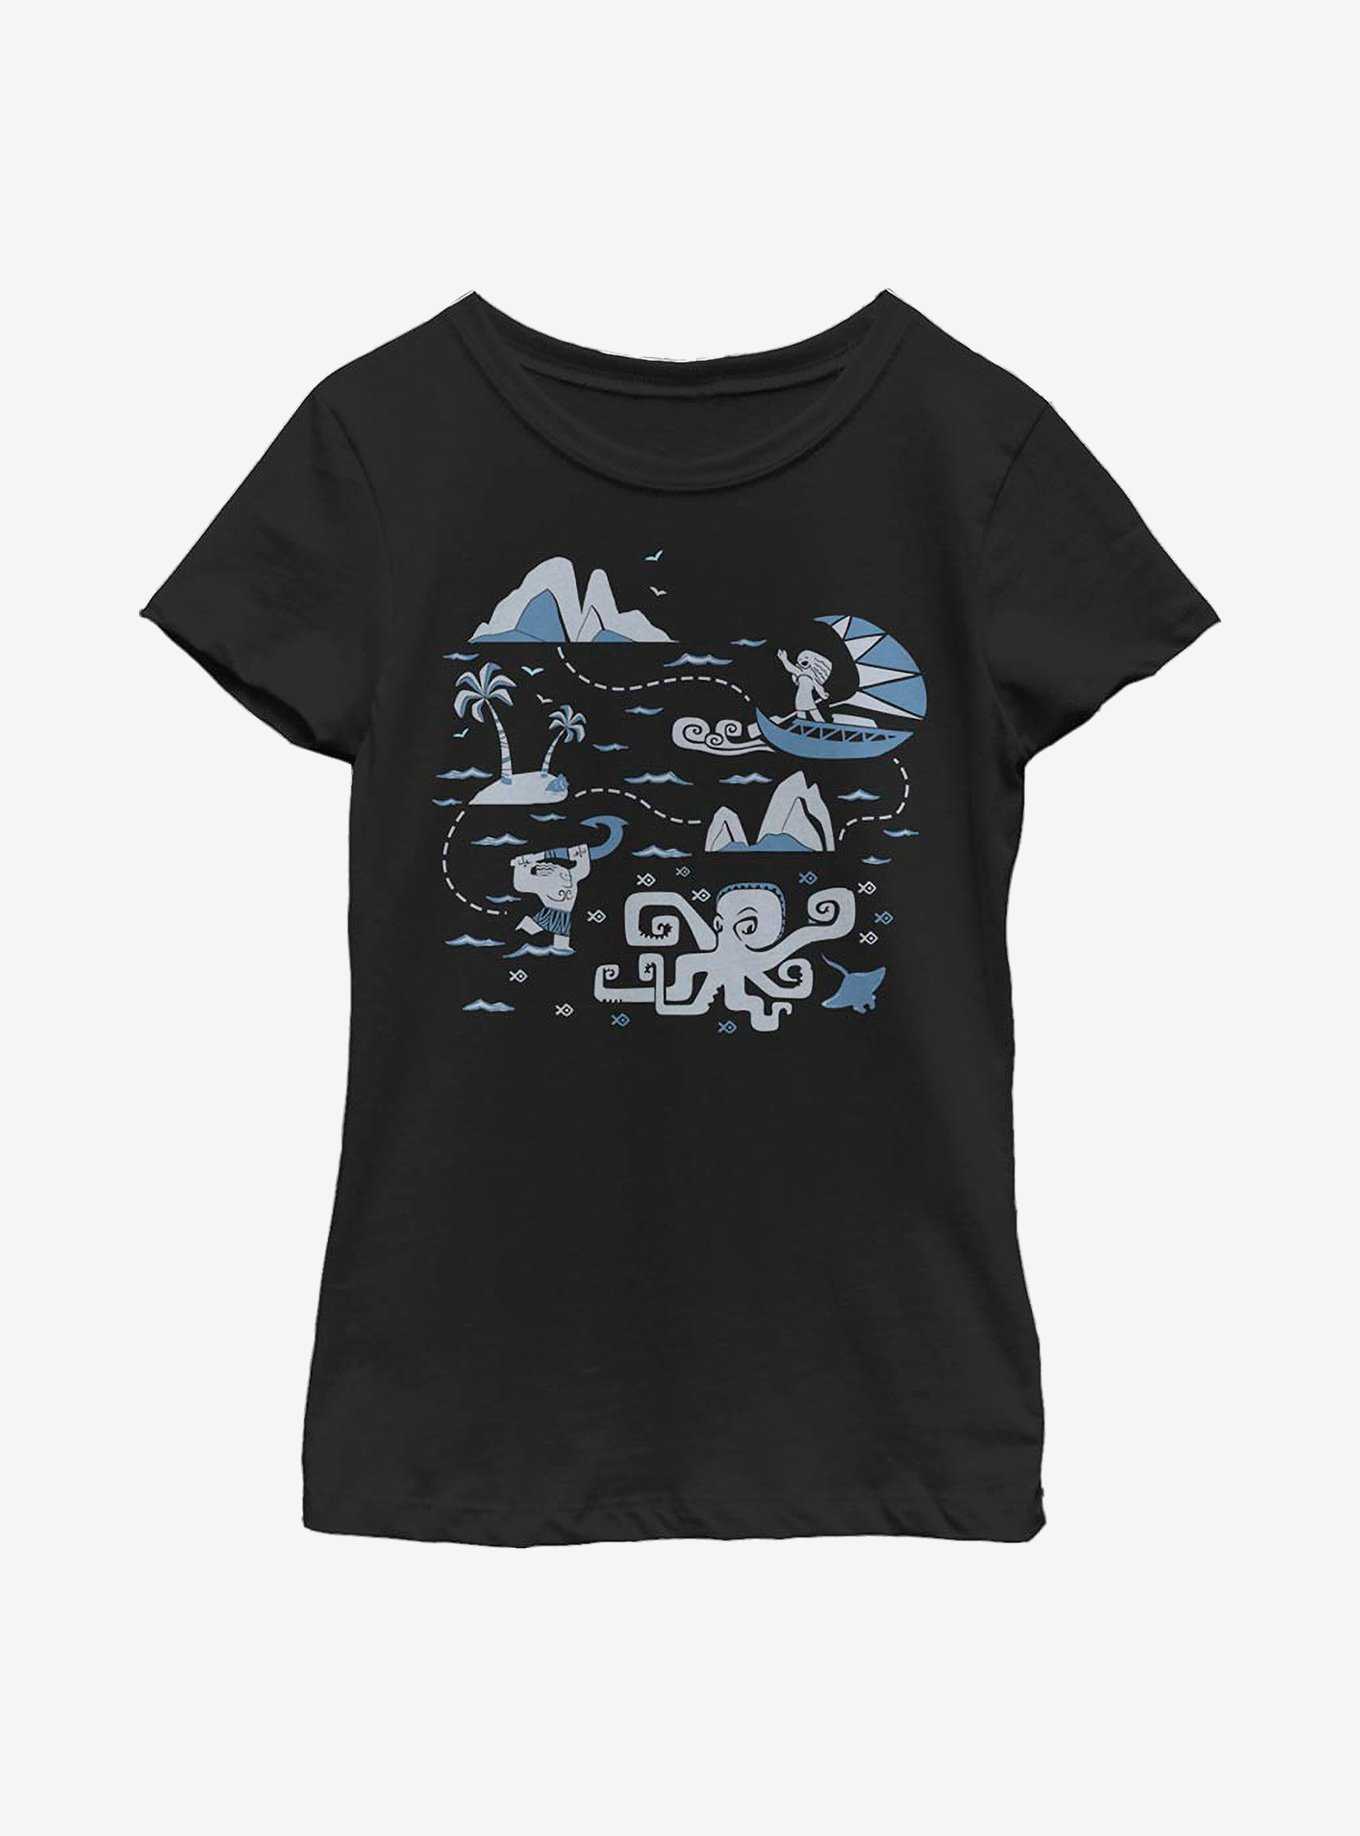 Disney Moana Voyage Collage Youth Girls T-Shirt, , hi-res